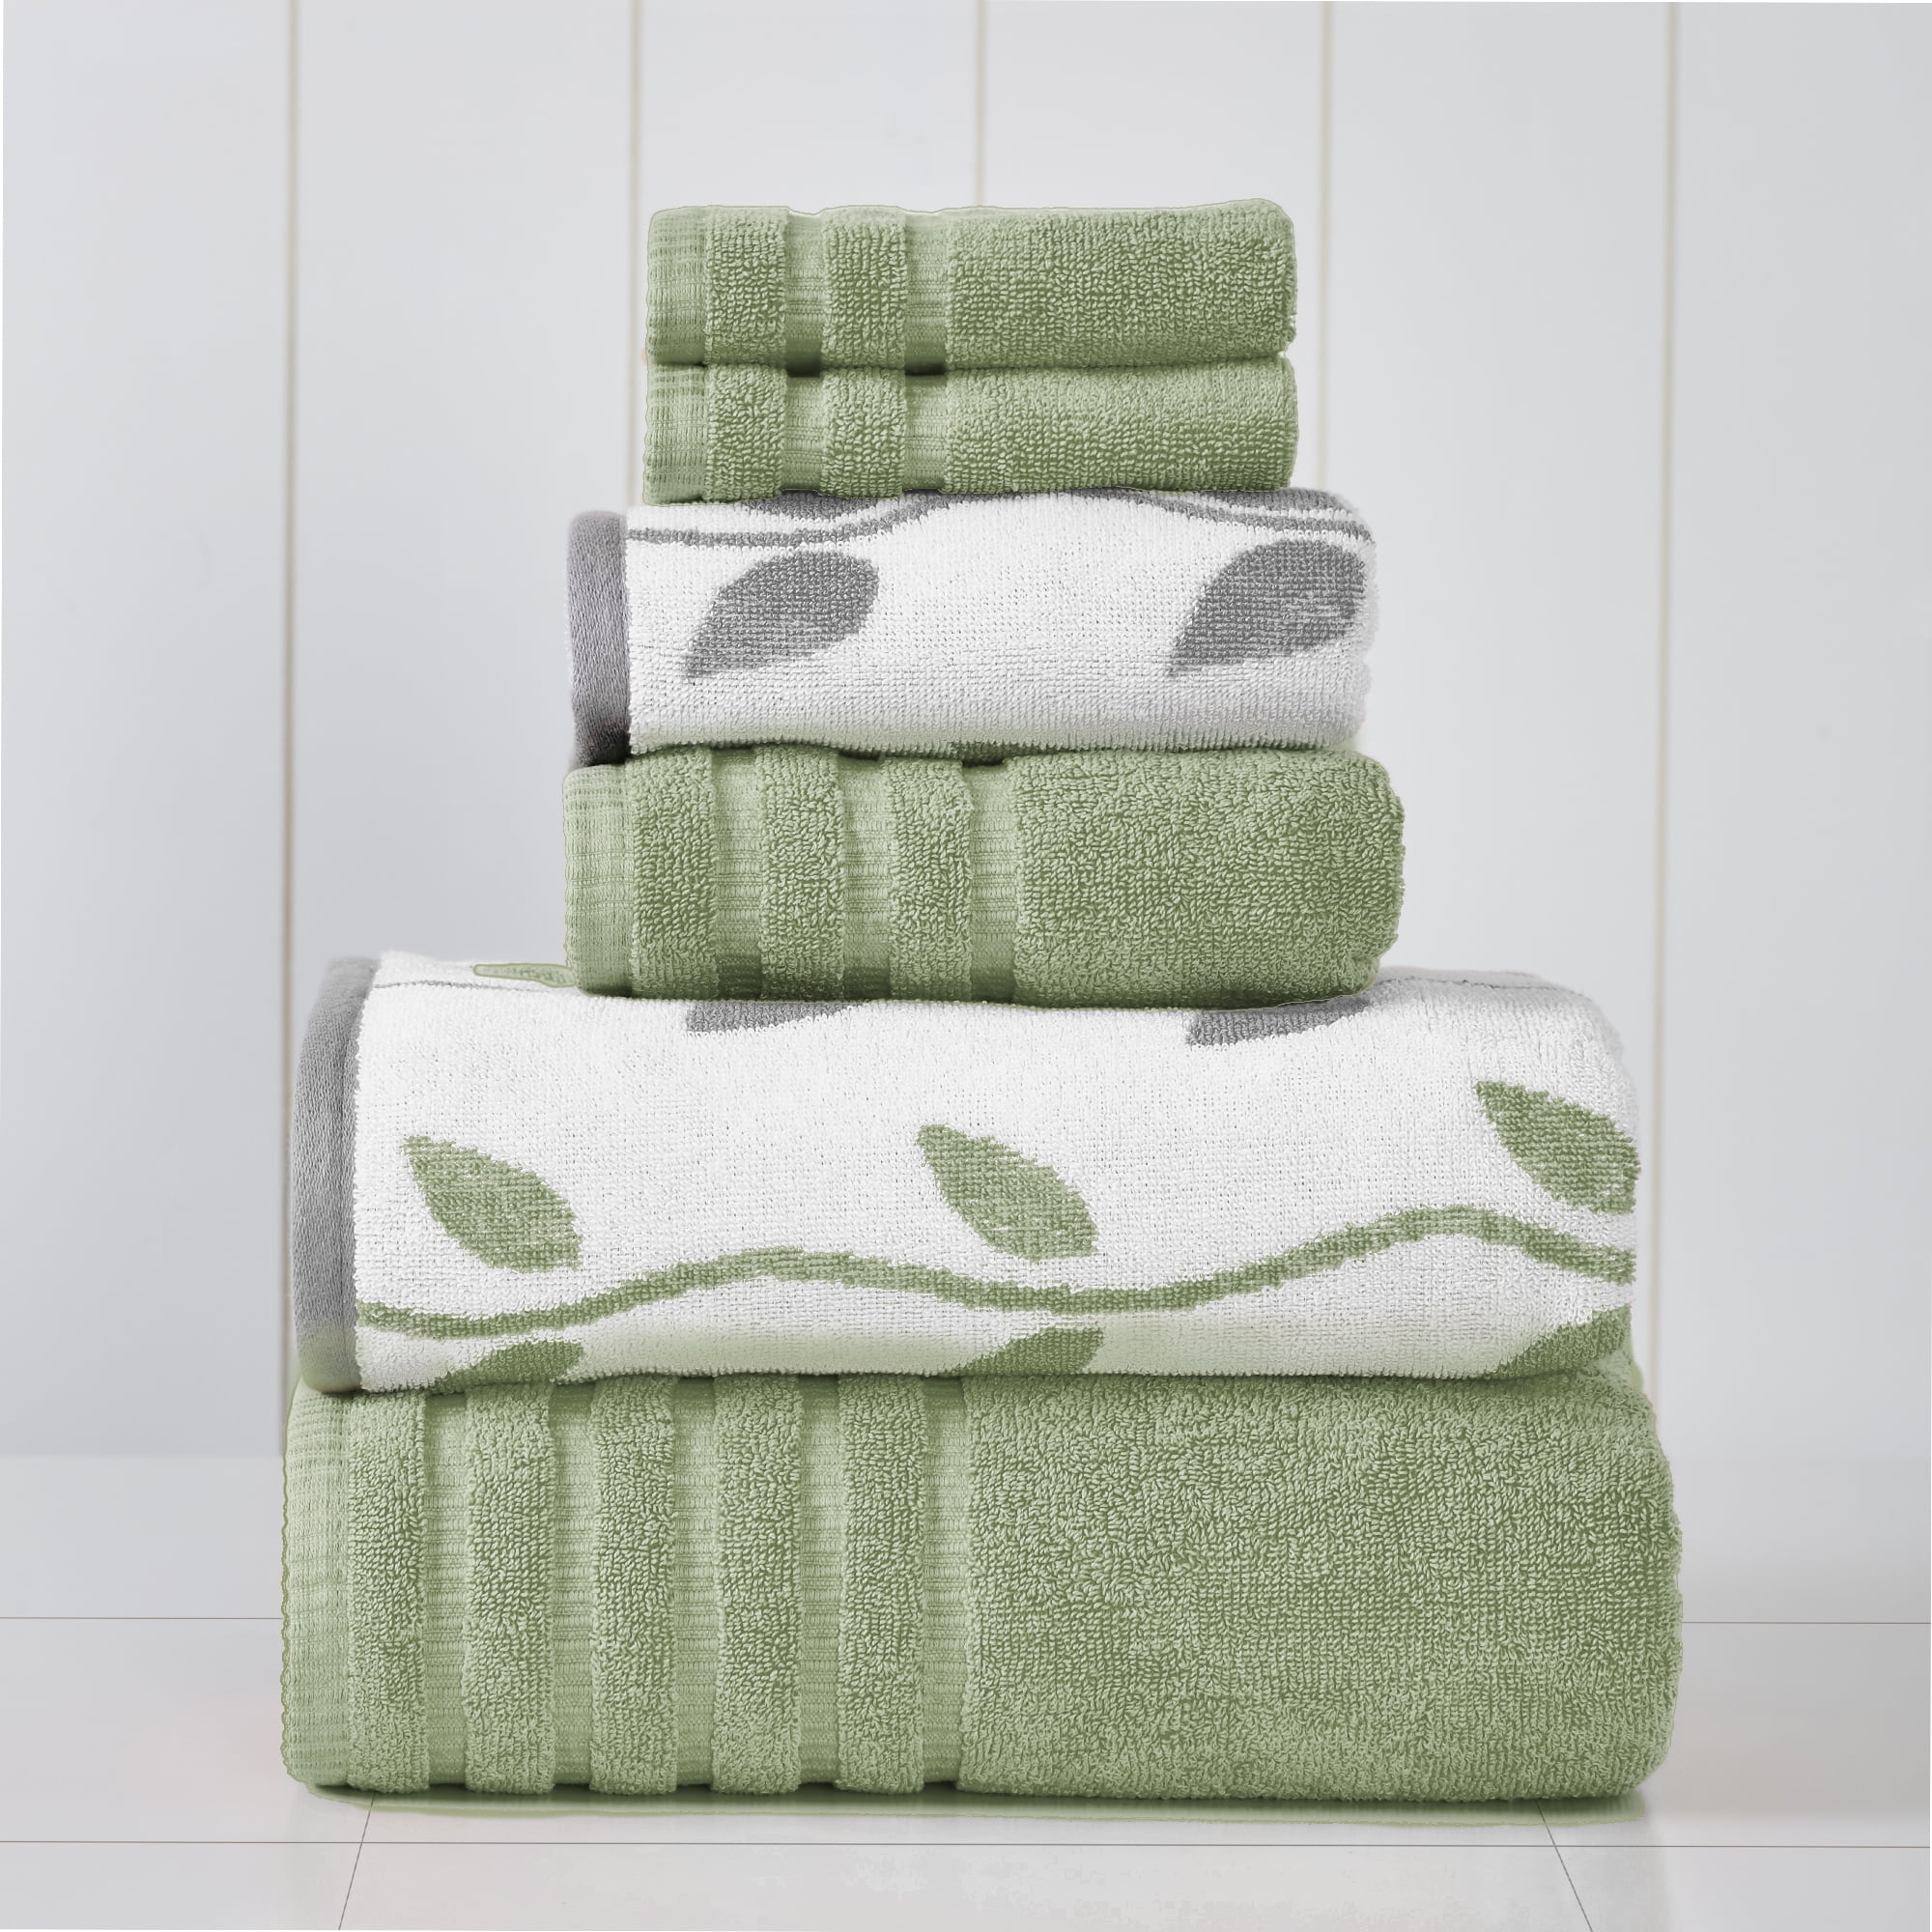 Ivory Organic Turkish Cotton Bath Towels, Set of 6 + Reviews